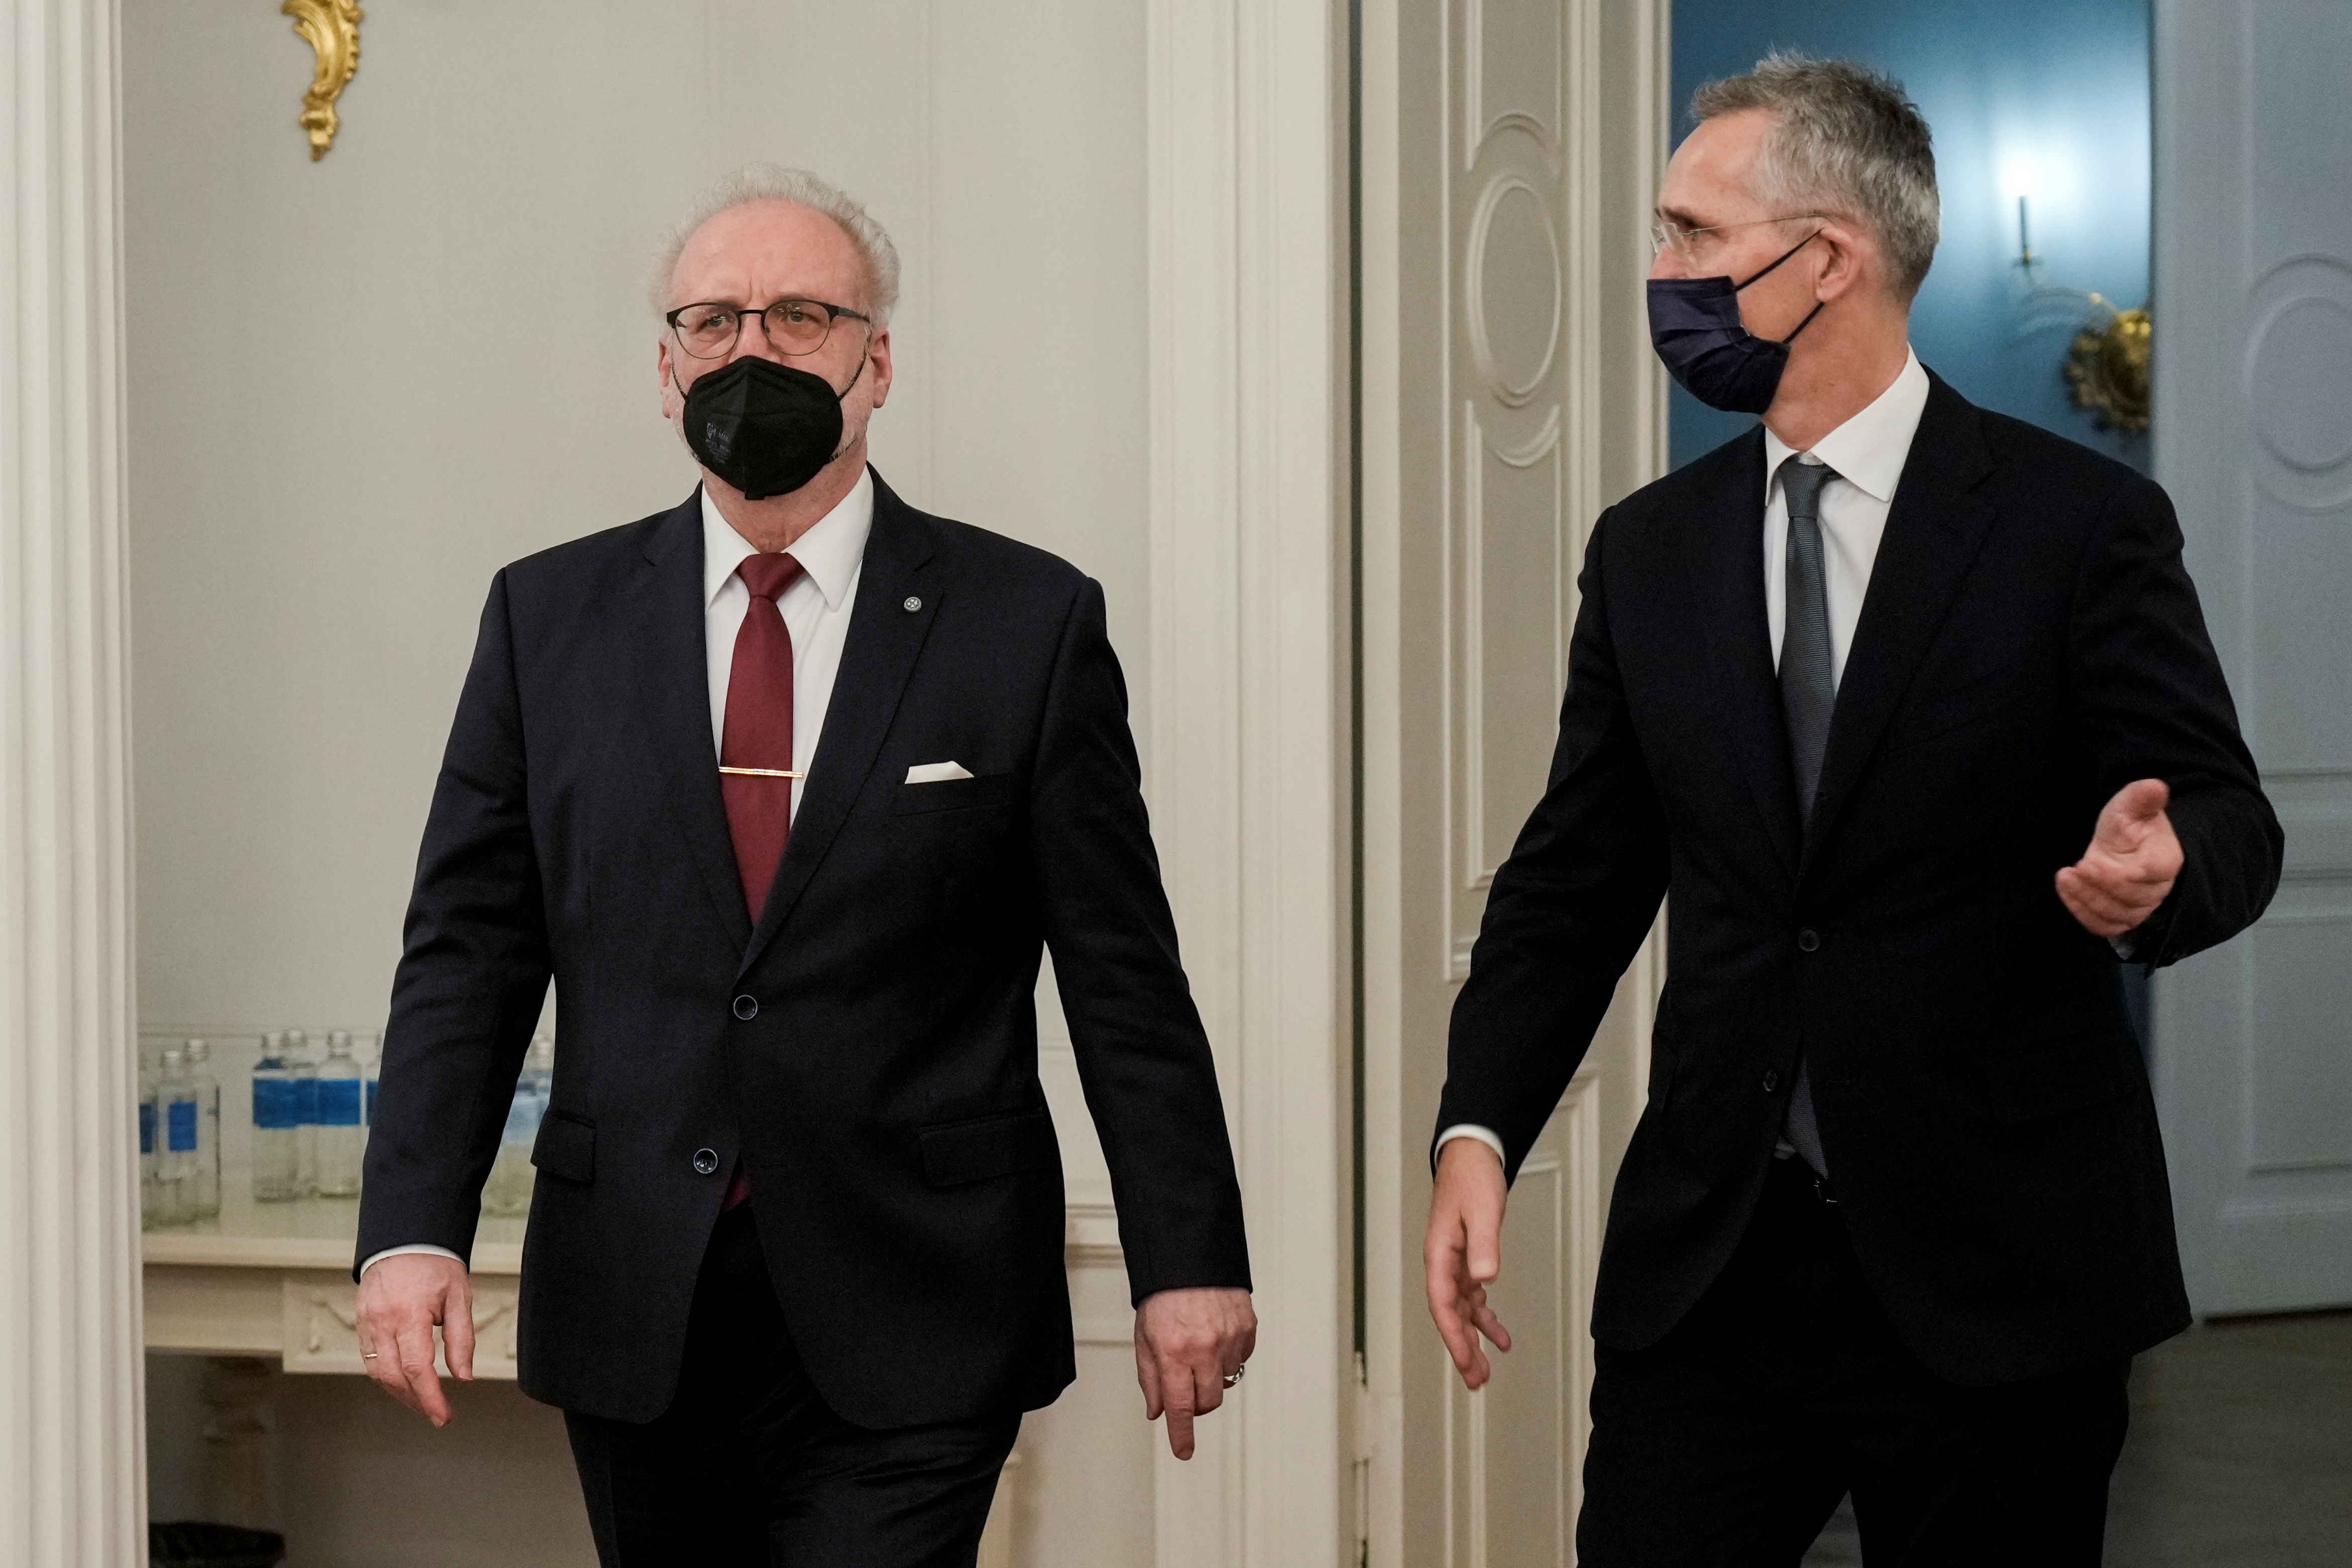 Latvian President Egils Levits and NATO Secretary General Jens Stoltenberg arrive for a news conference in Riga, Latvia November 29, 2021. REUTERS/Ints Kalnins